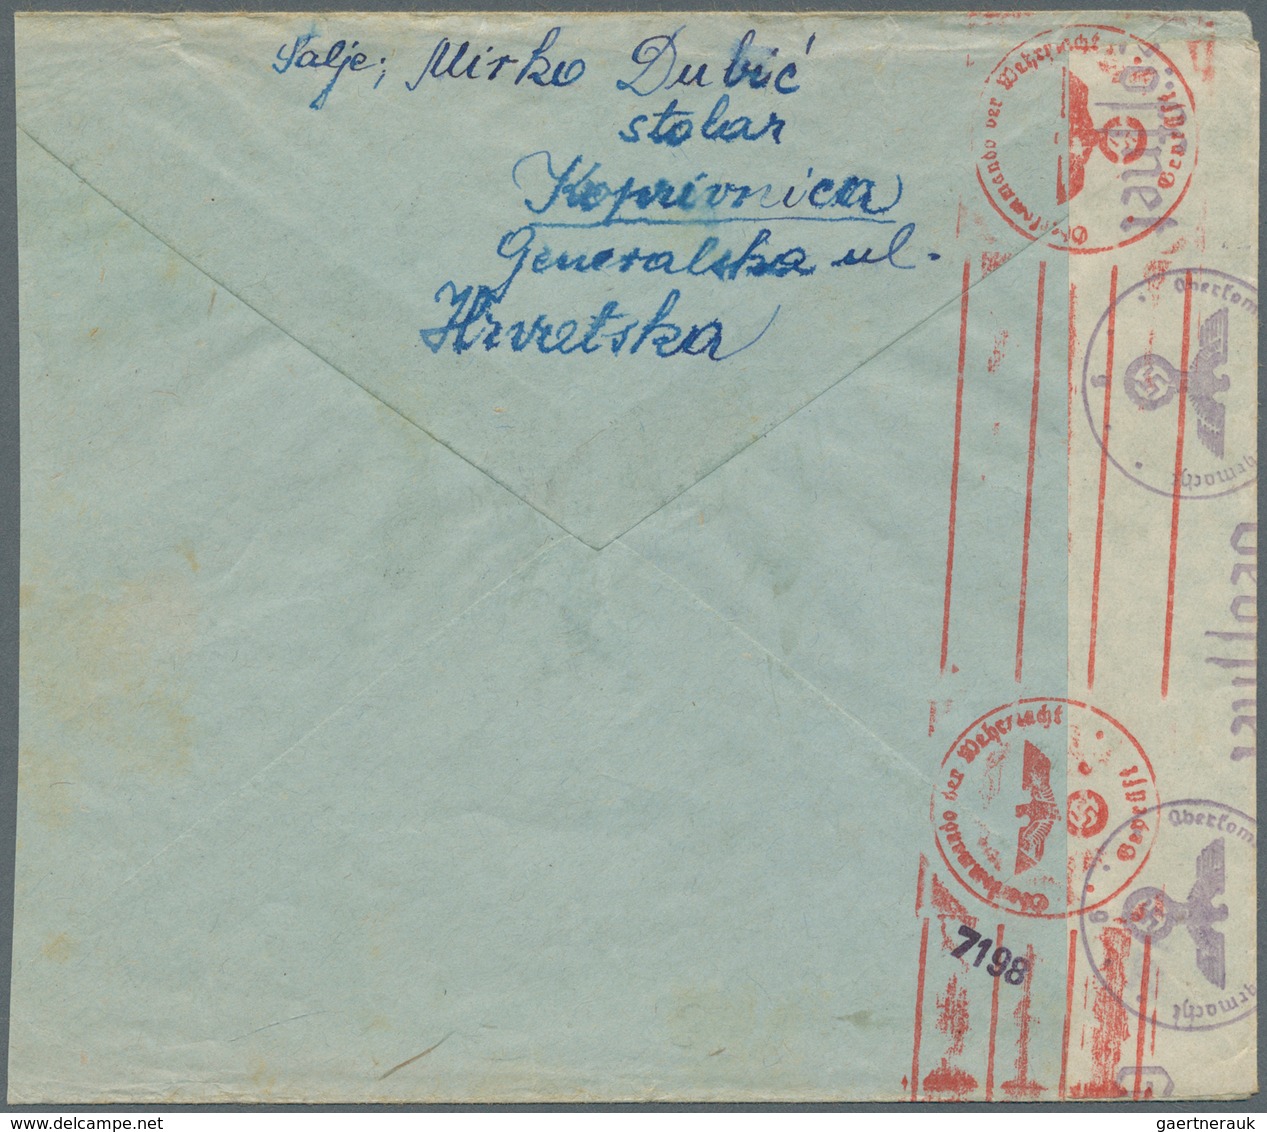 Kroatien: 1941, Letter To Austria, As Part Of The “Great 3rd Reich” Endorsed “Deutschland”, Franked - Kroatië